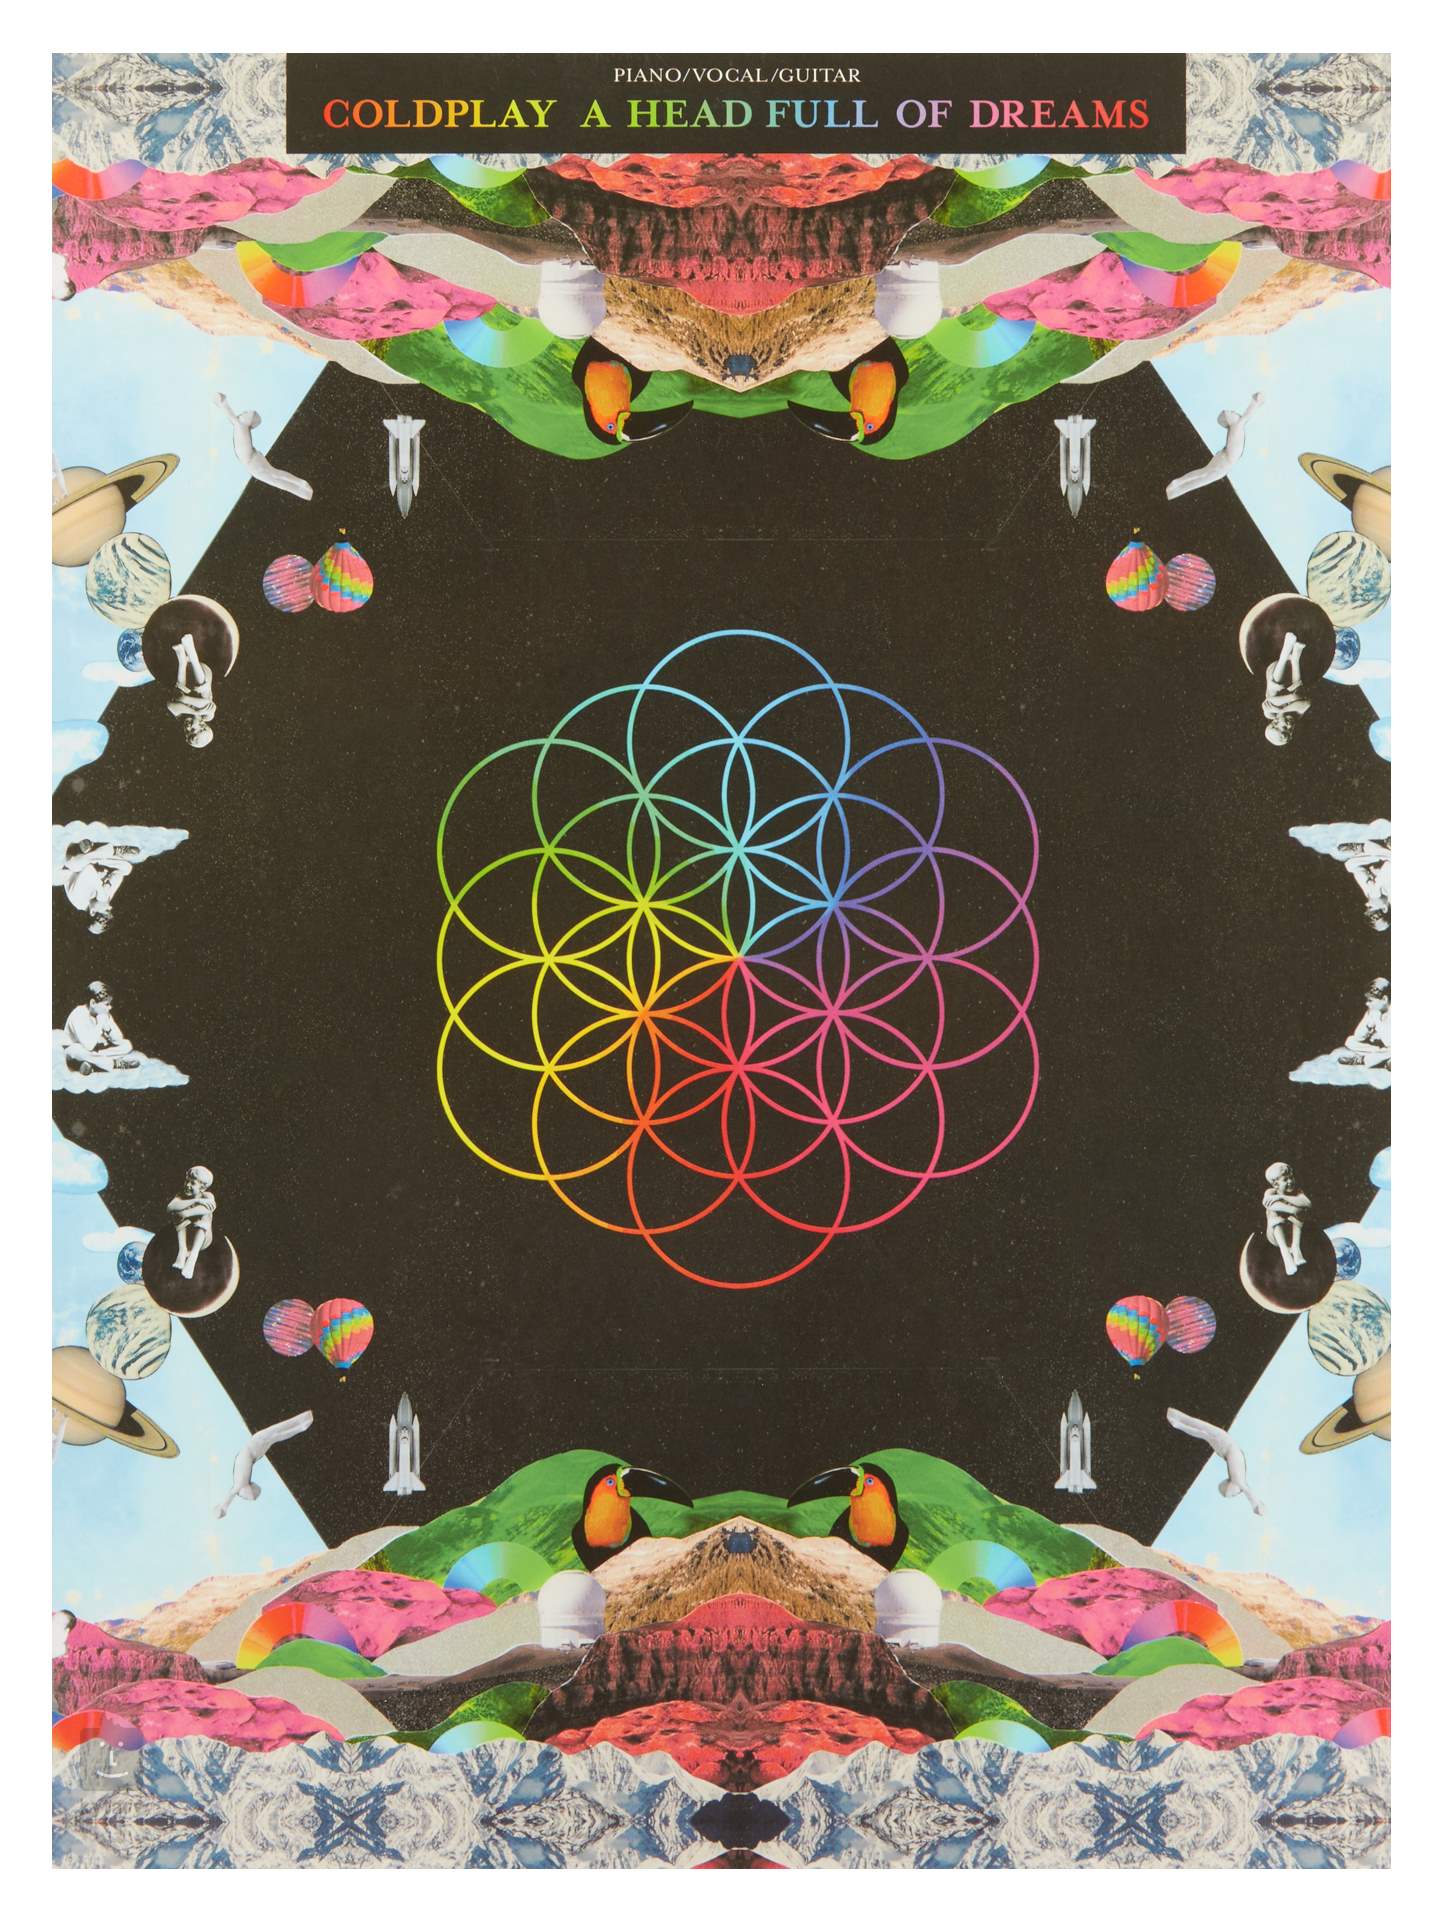 Farmacologie Jogger Toxic  MS Coldplay: A Head Full Of Dreams Partituri pentru pian, chitară